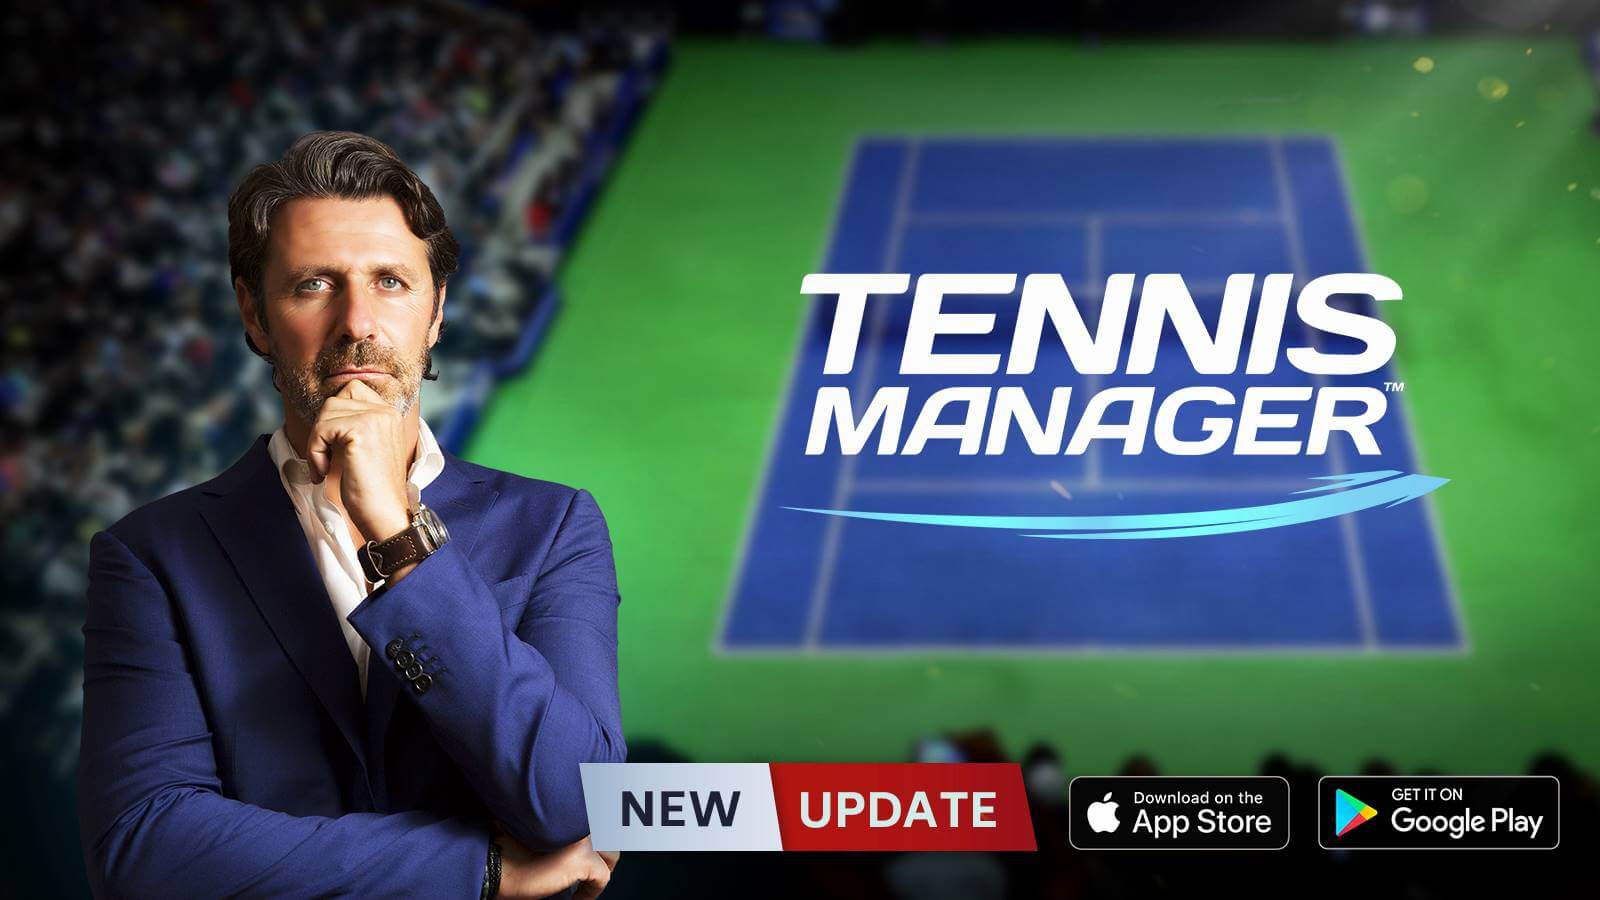 Frederique Constant chronometrażystą gry Tennis Manager 2021